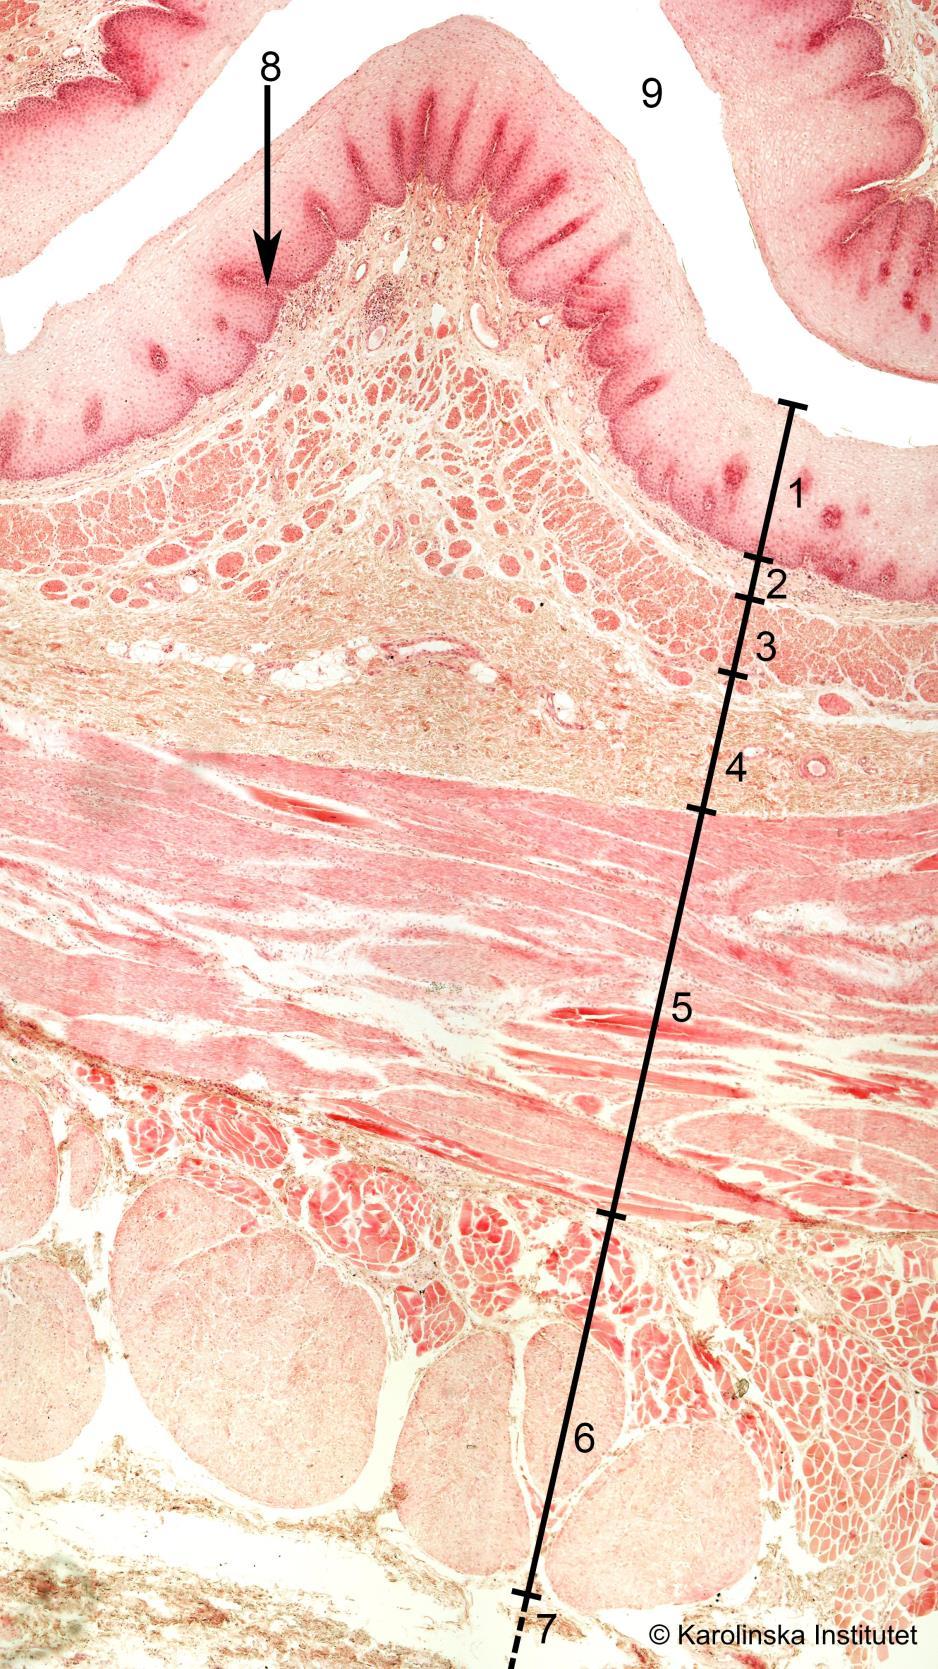 54. Esophagus Htx-eosin 1. Lamina epitelialis 6. Tunica muscularis externa (longitudinellt) 2. Lamina propria 7.